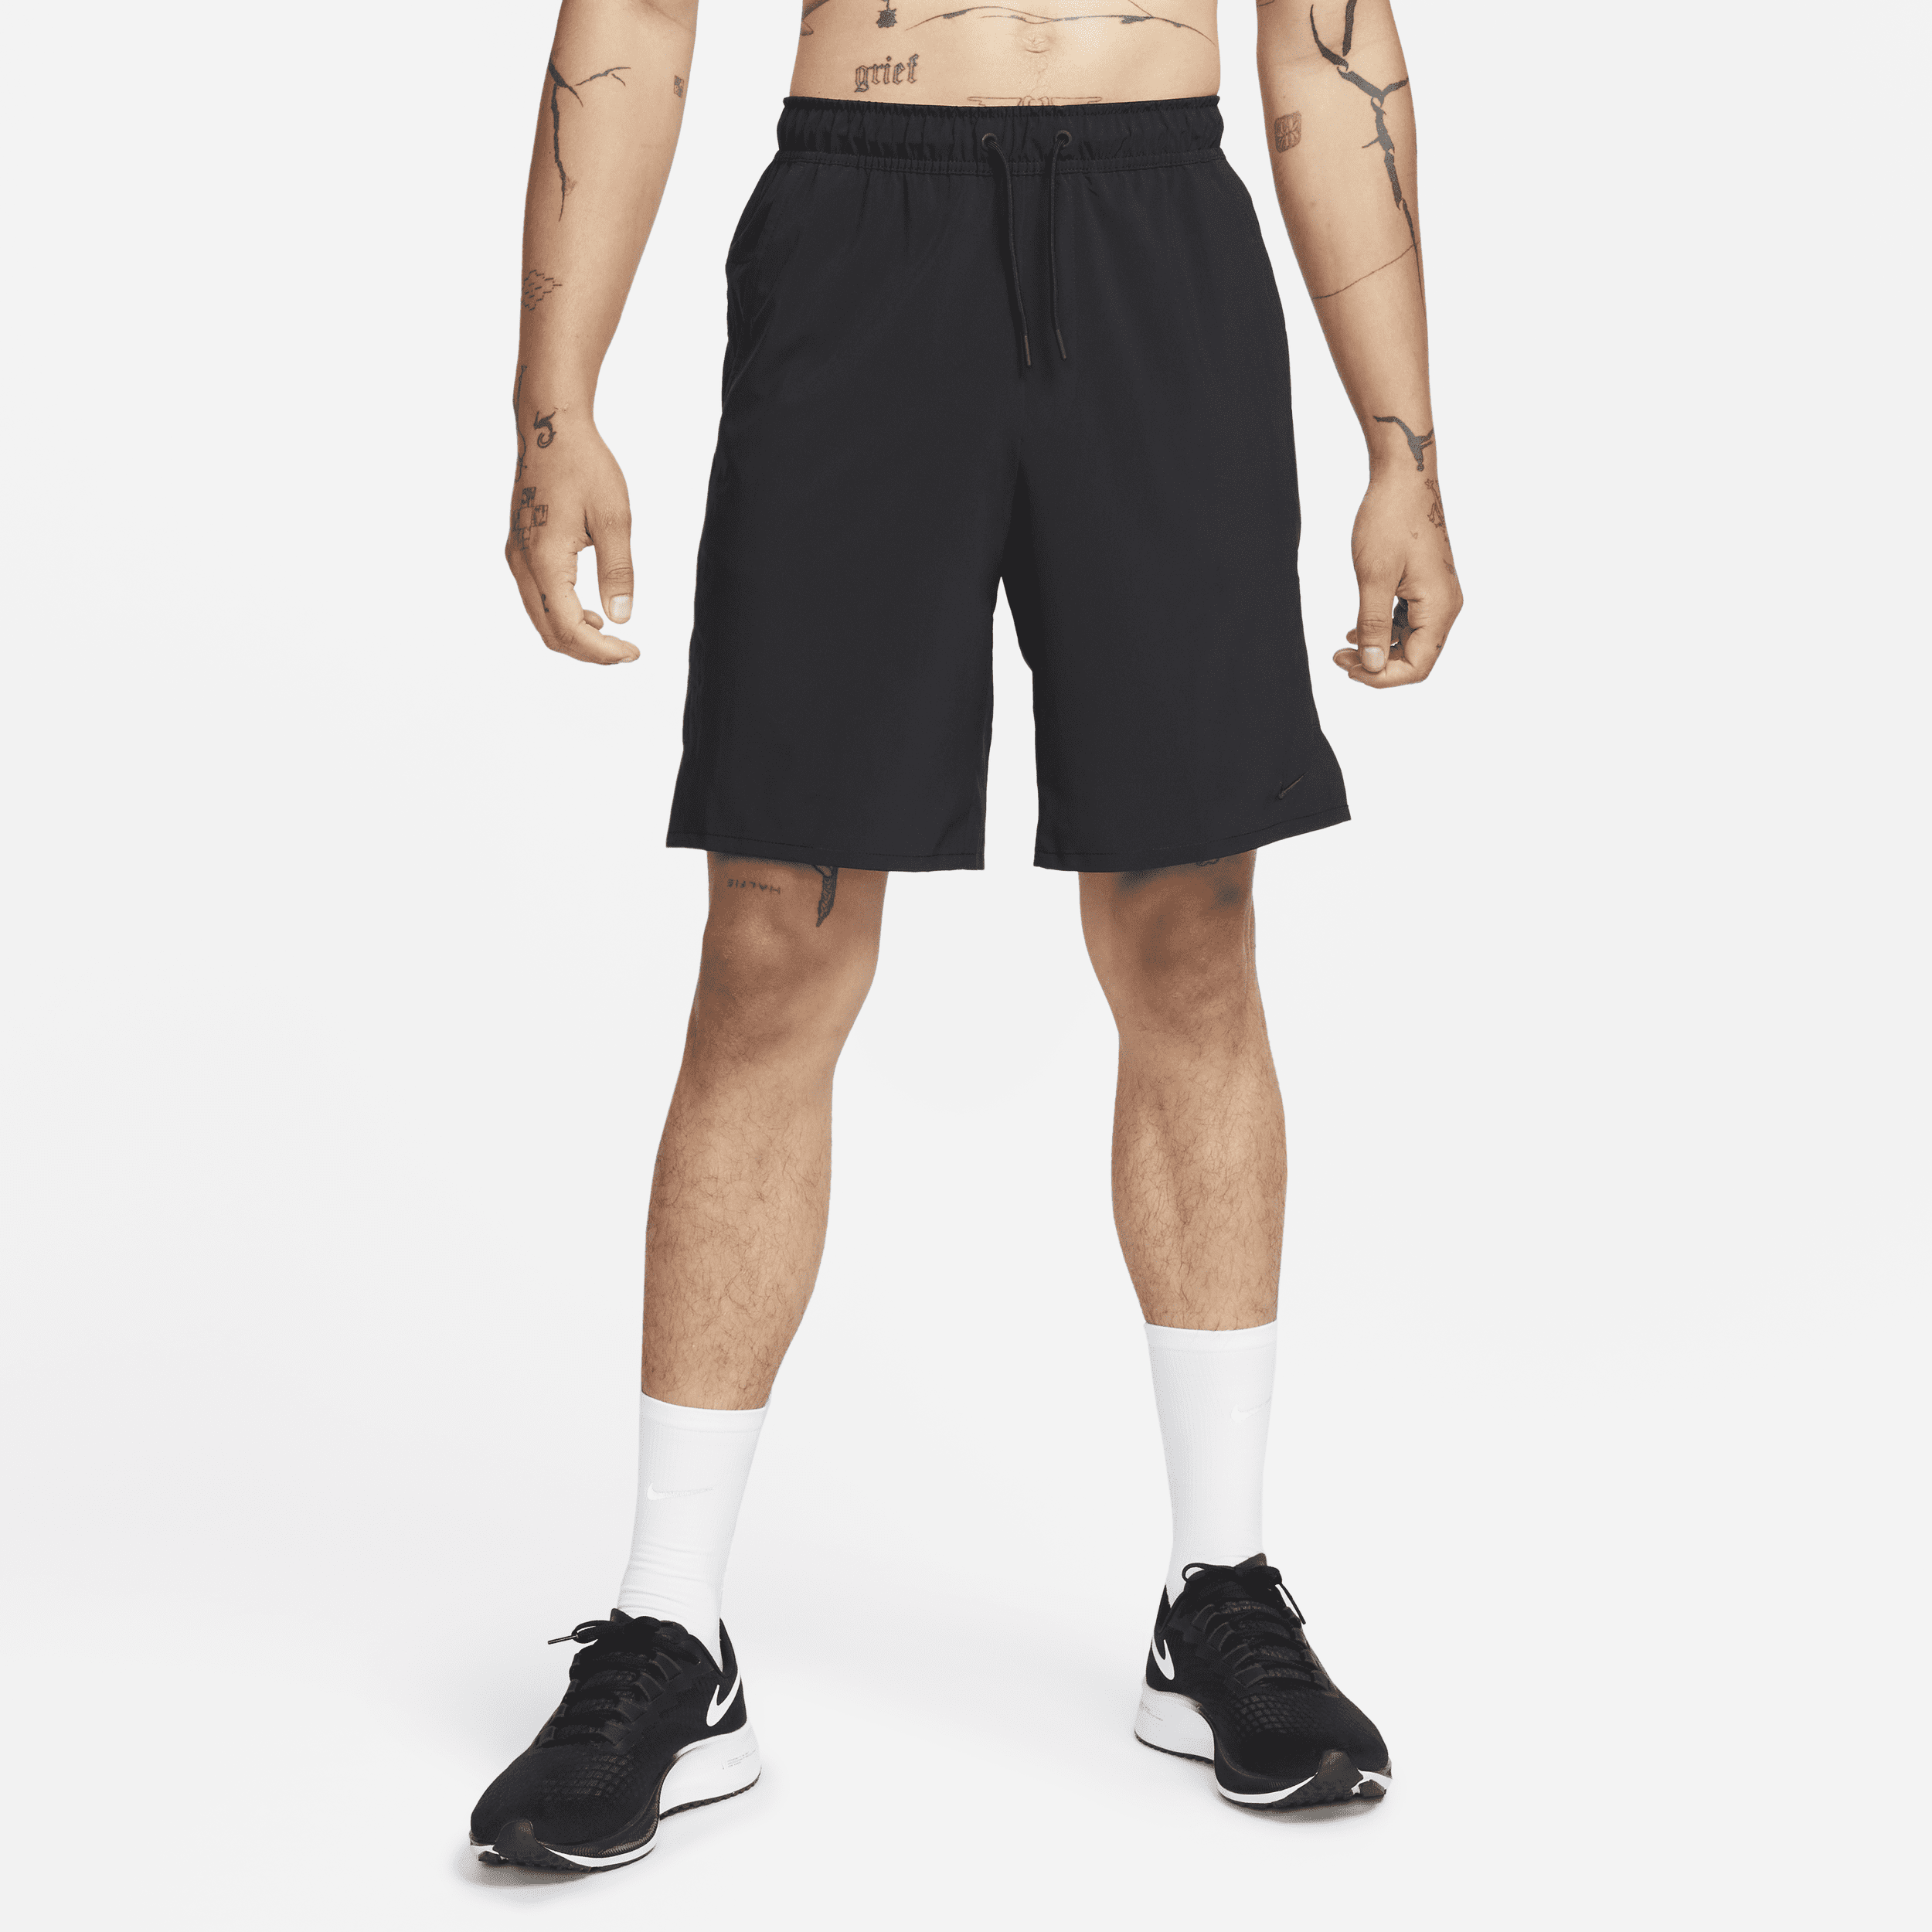 Nike Unlimited Pantalón corto versátil Dri-FIT de 23 cm sin forro - Hombre - Negro